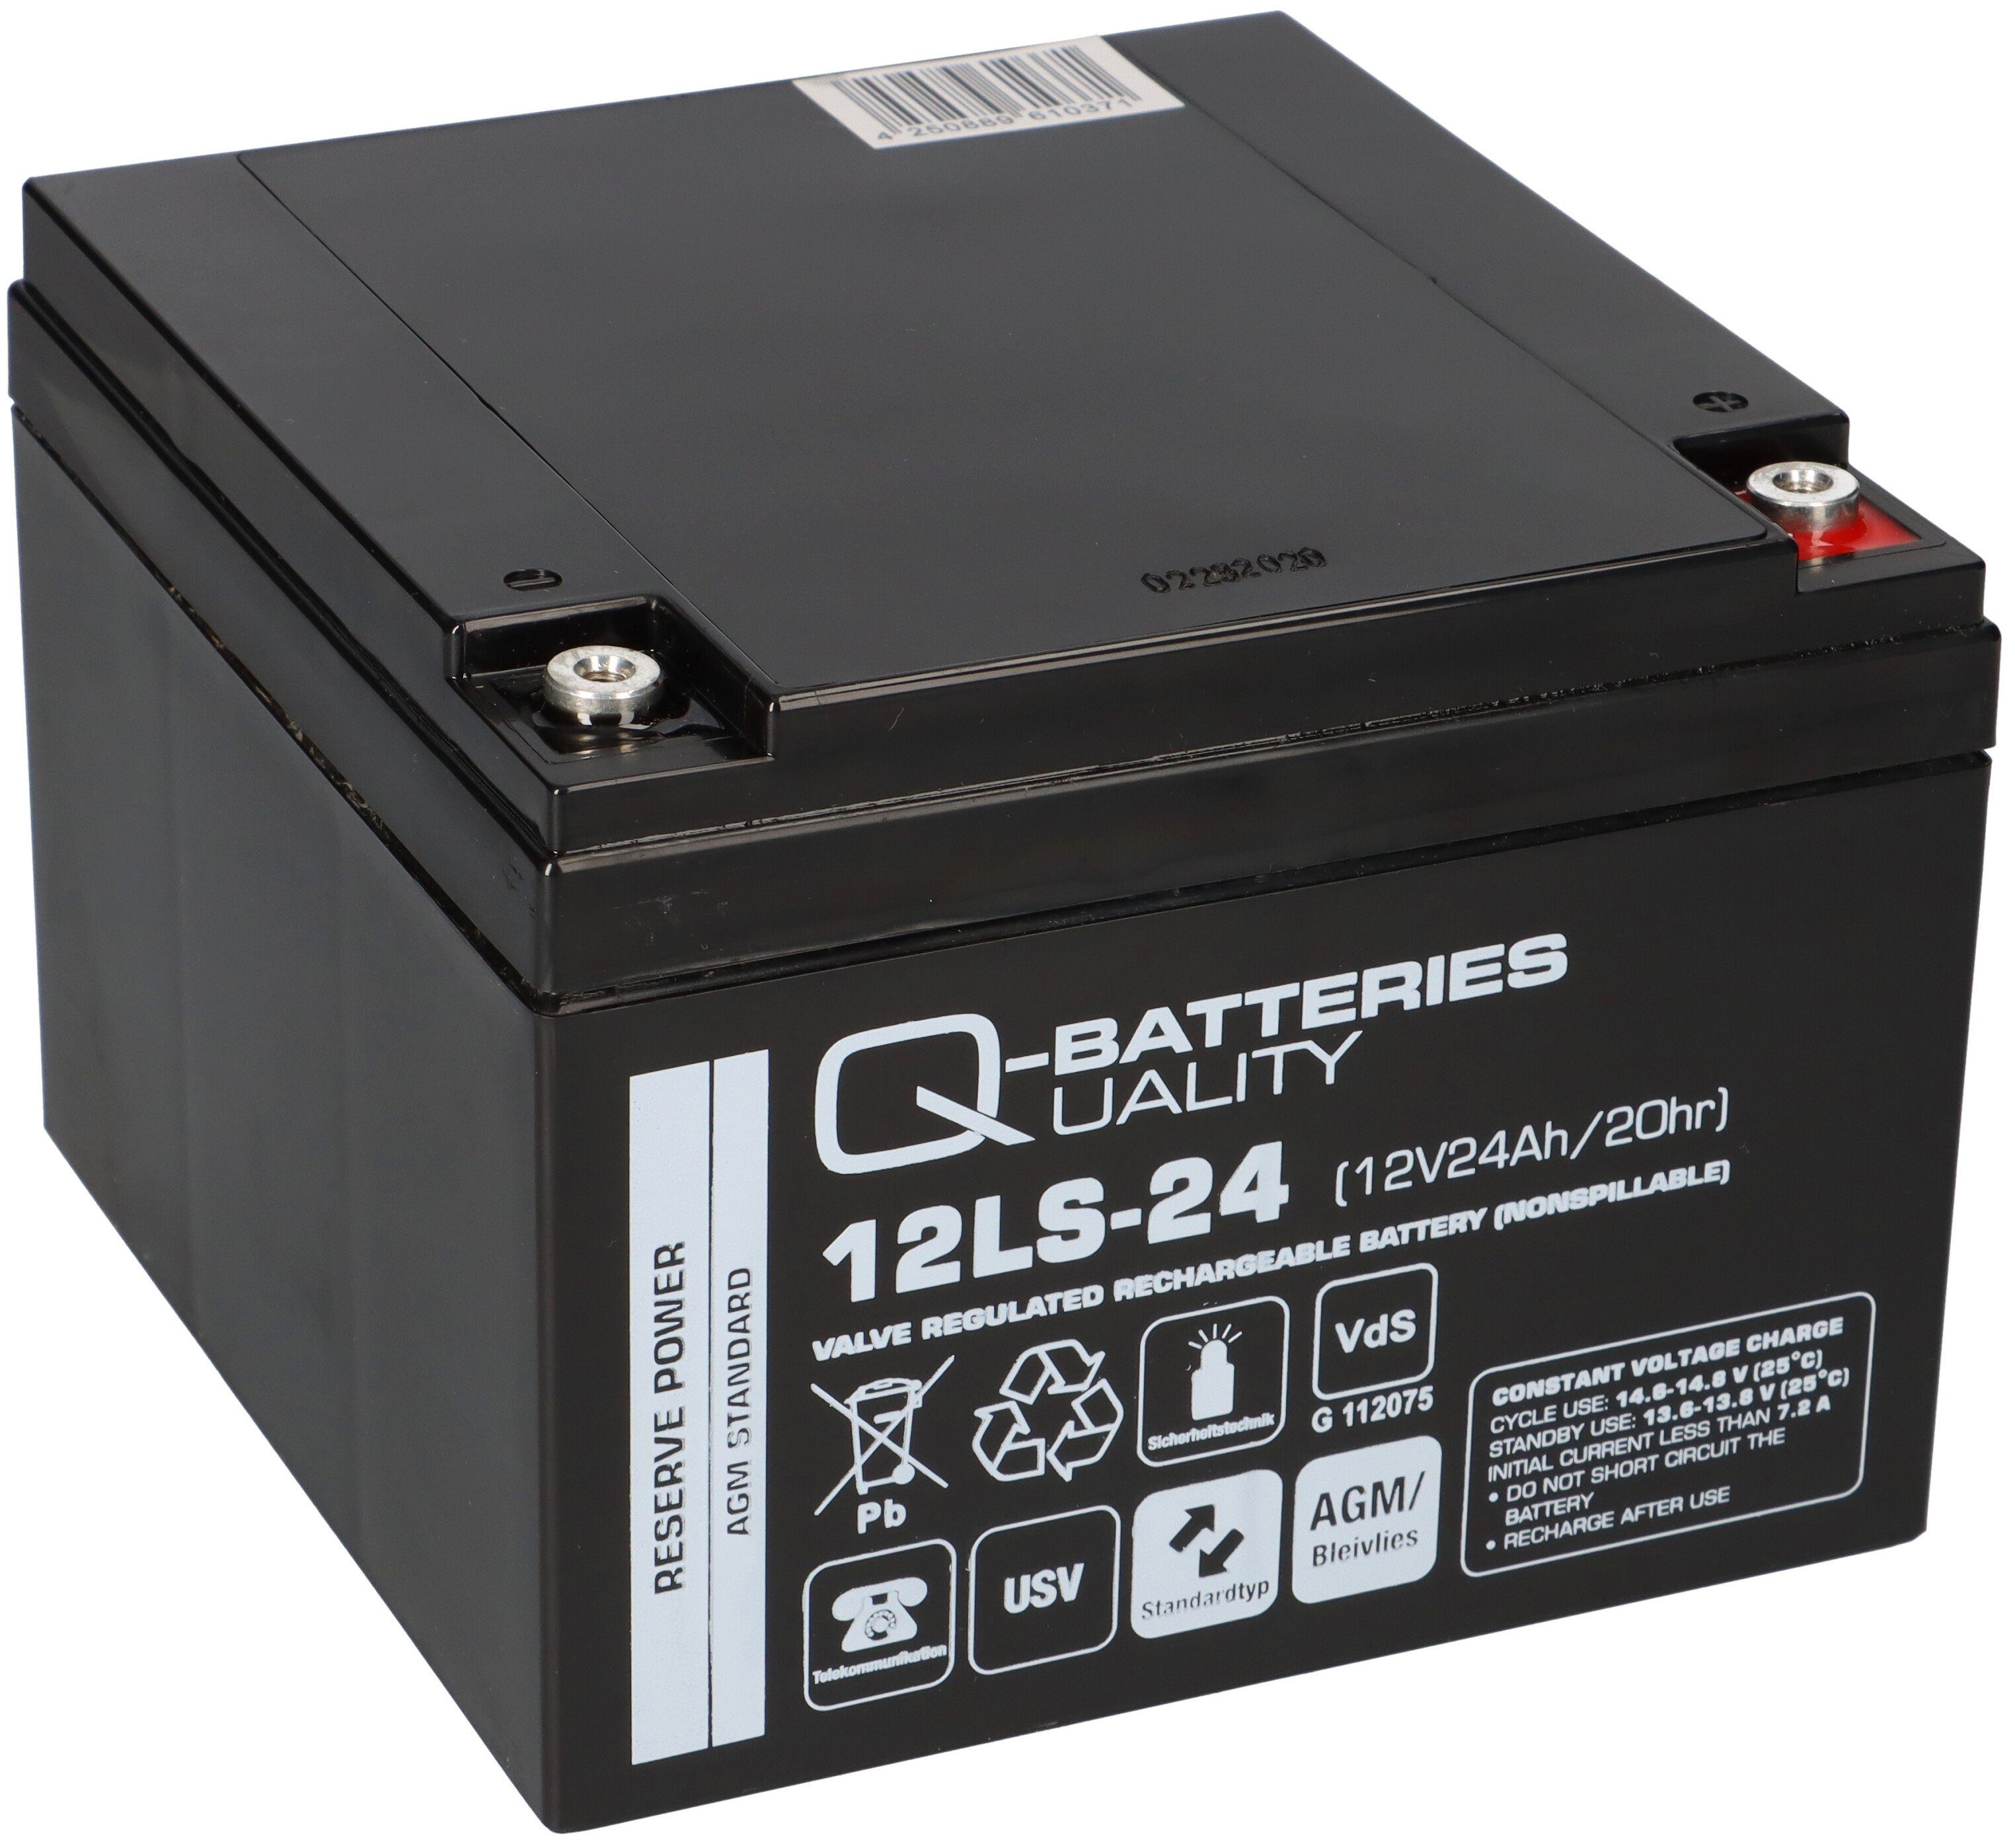 Q-Batteries Q-Batteries 12LS-24 12V 24Ah Blei-Vlies-Akku / AGM VRLA mit VdS Bleiakkus